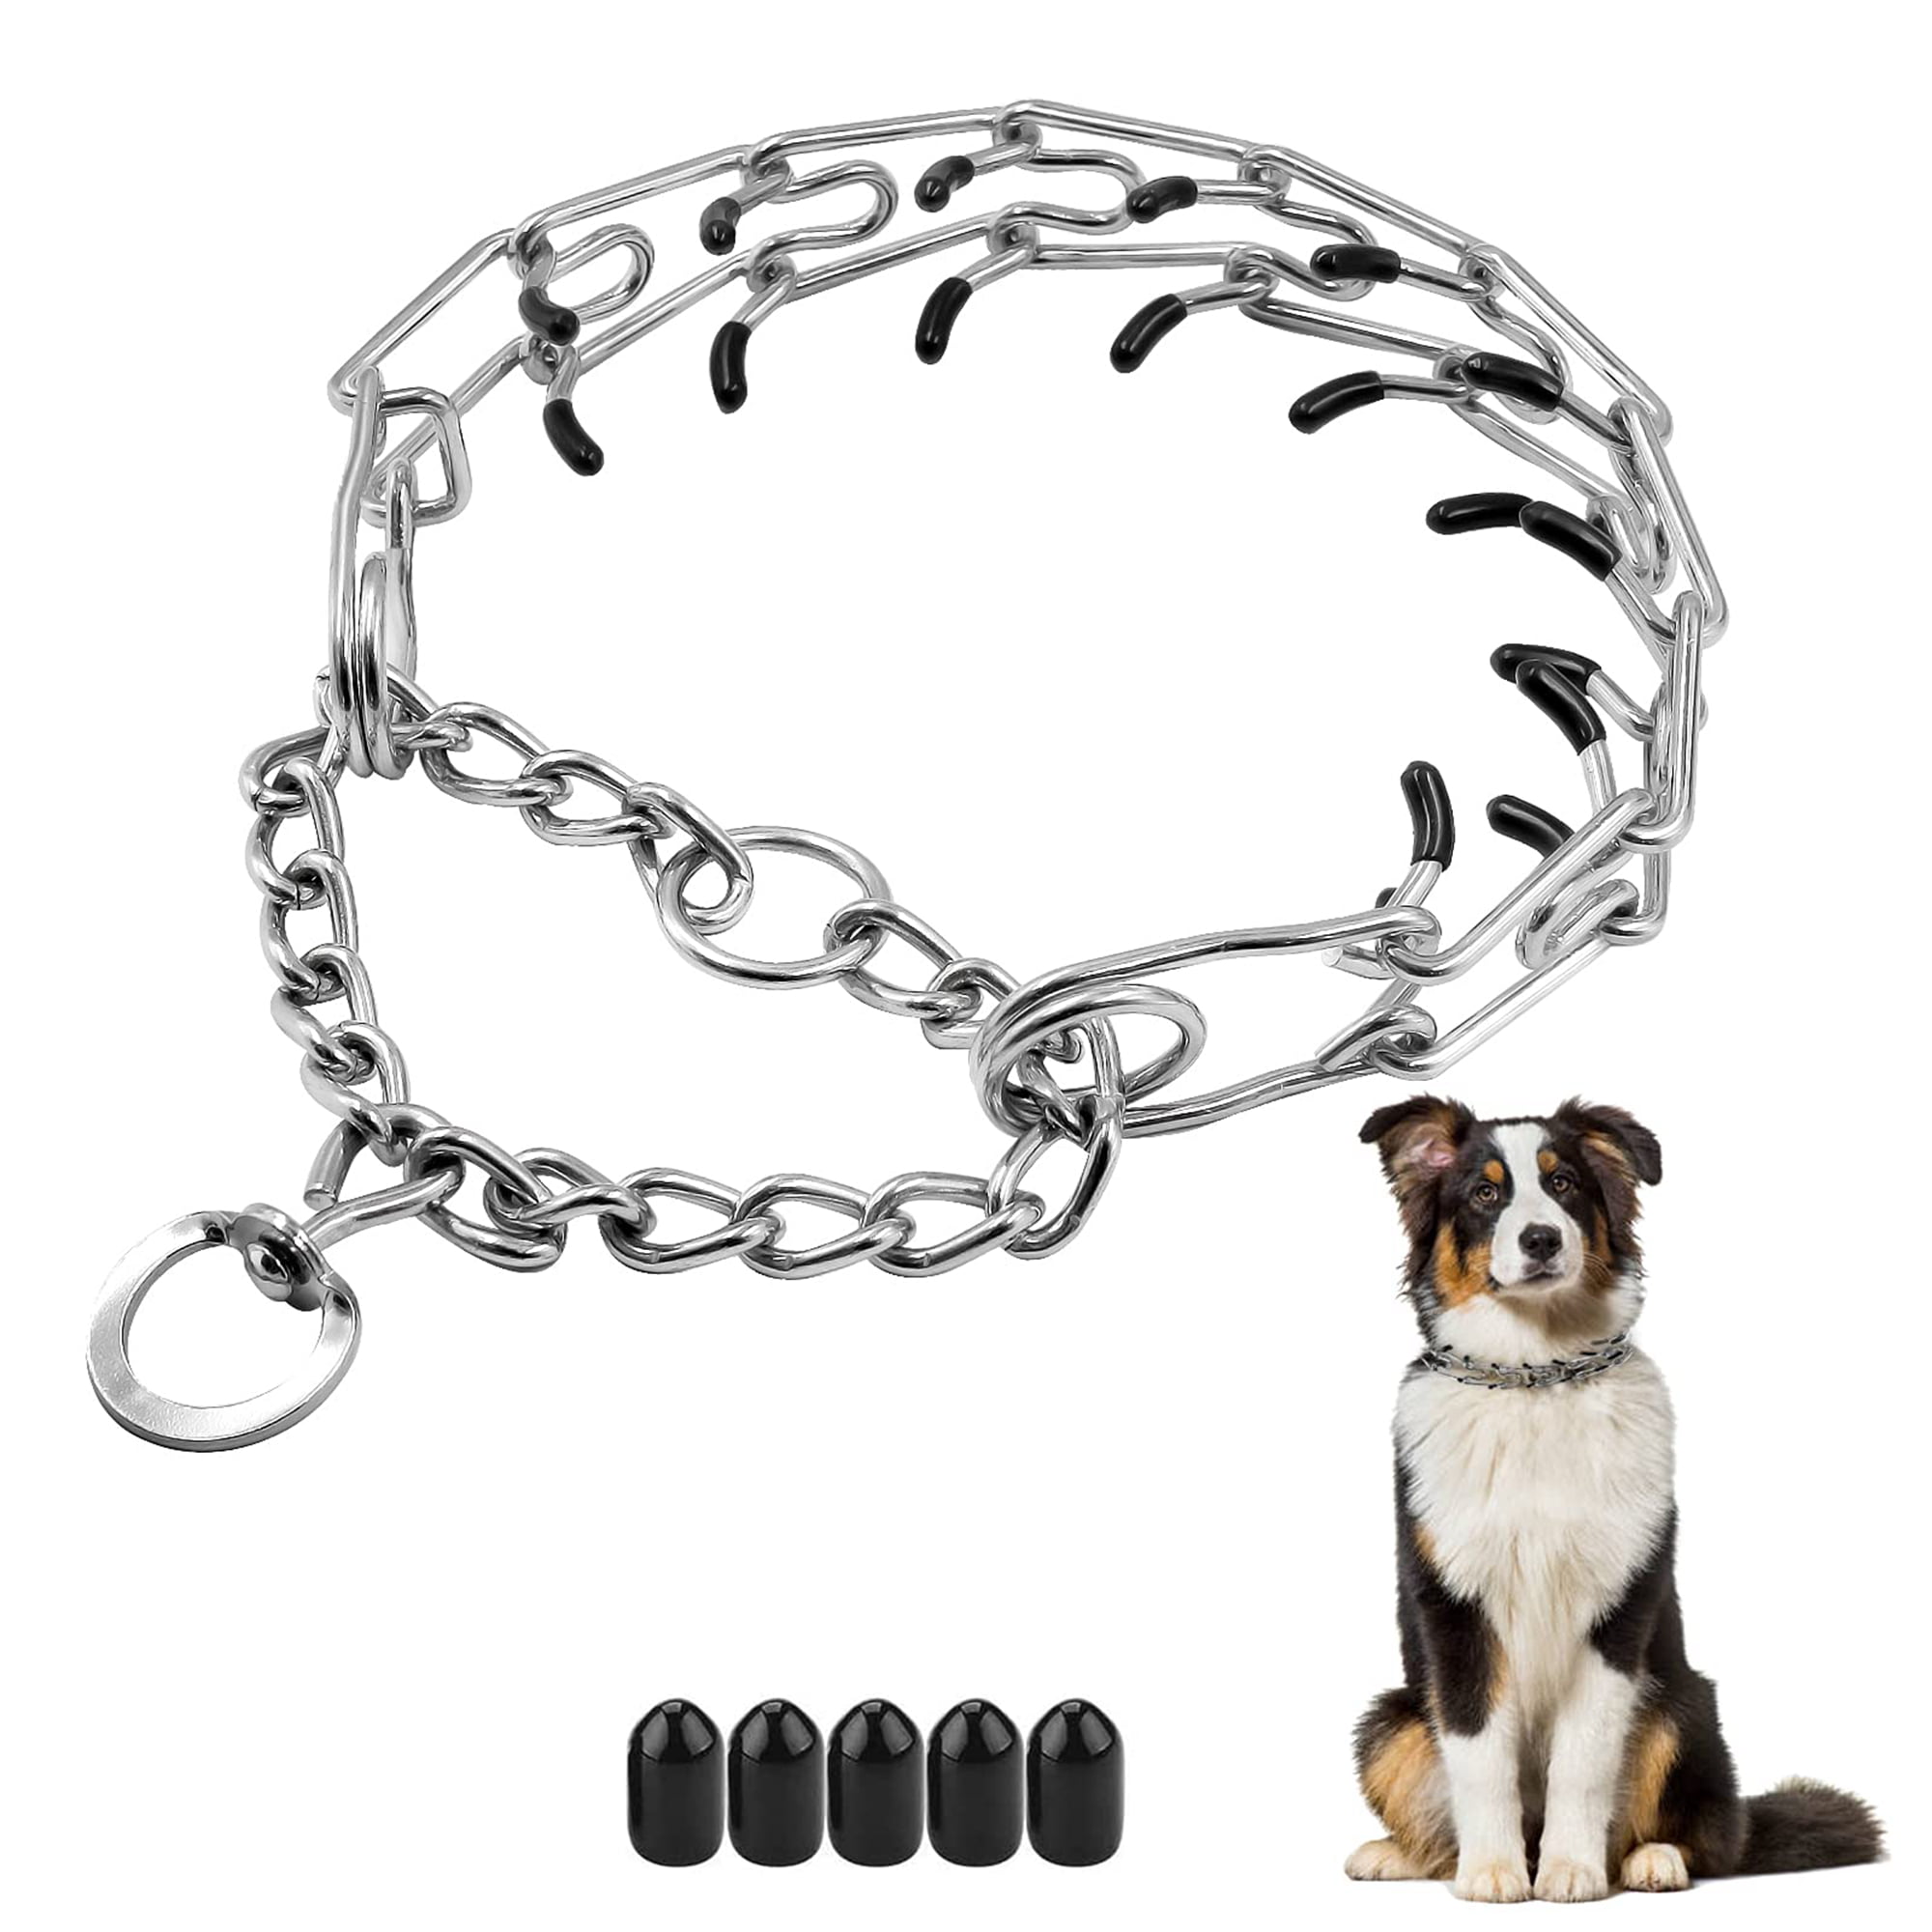 Frienda 48 Pieces Dog Prong Collar Link Set Includes 8 Pieces Dog Prong Collar Extra Links and 40 Pieces Prong Collar Tips Dog Pinch Collar Link and Rubber Tips Medium Size 3 mm 